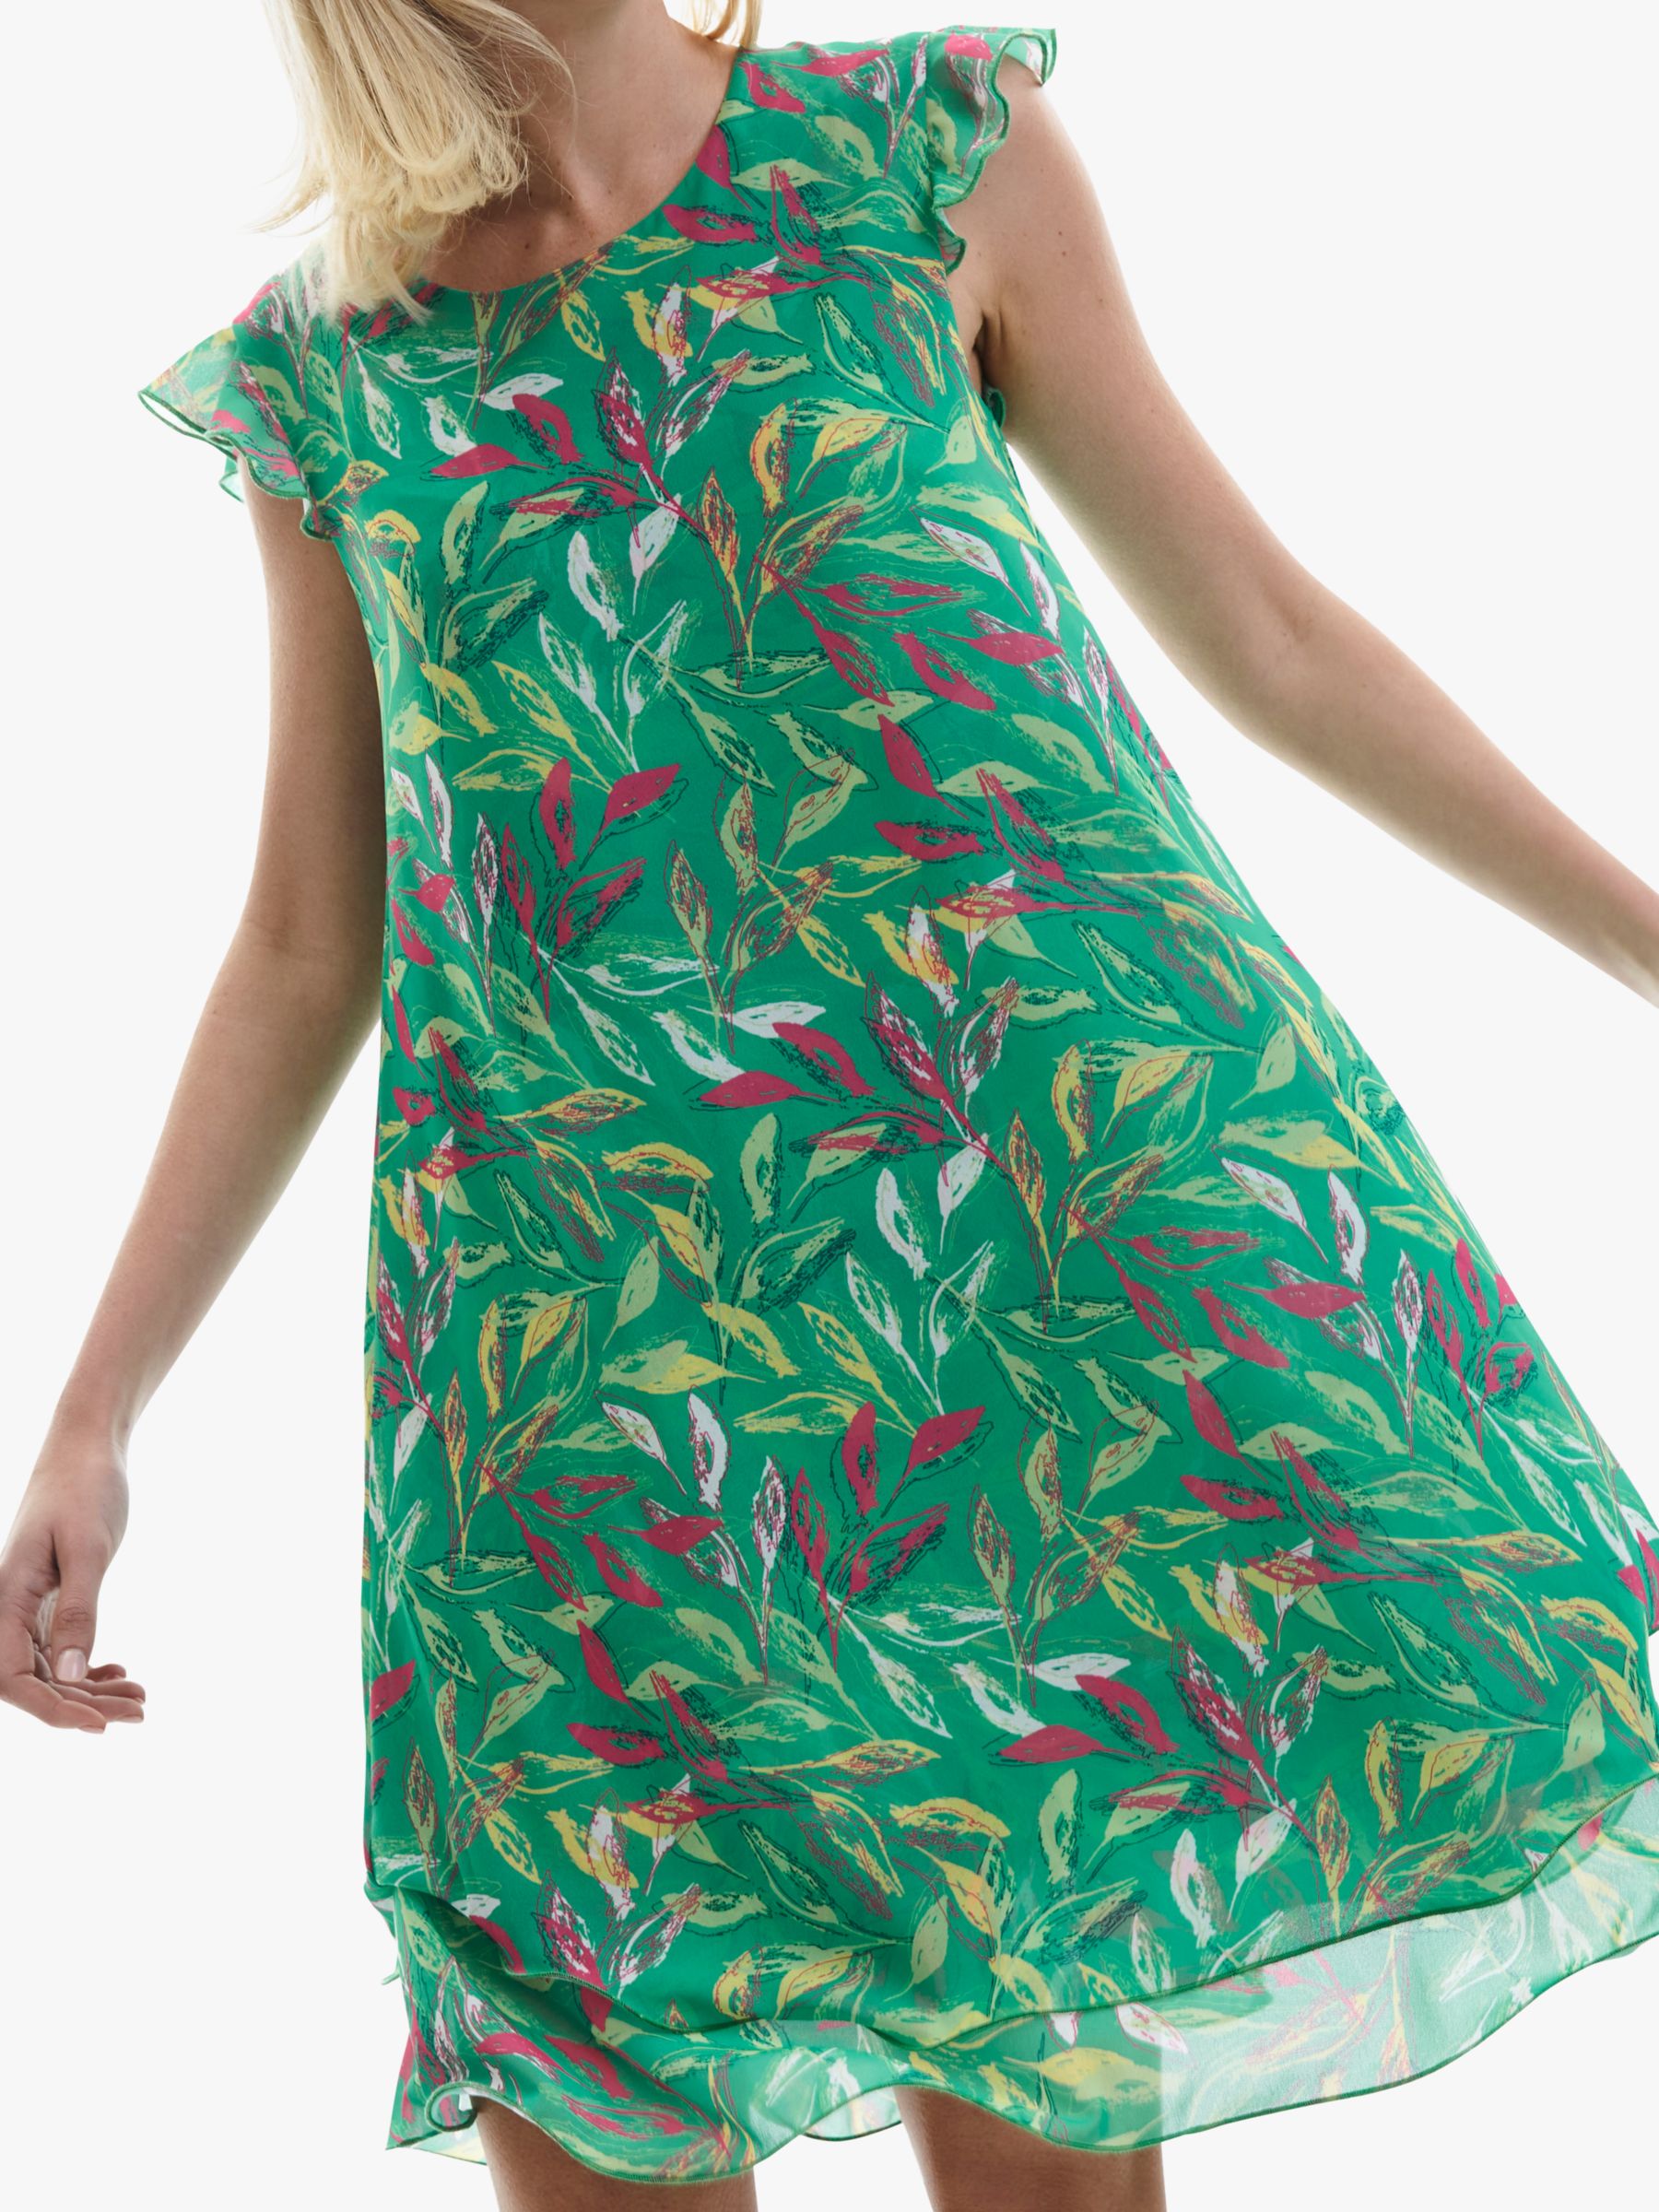 James Lakeland Leaf Print Ruffle Sleeve Wave Hem Dress, Green, 8